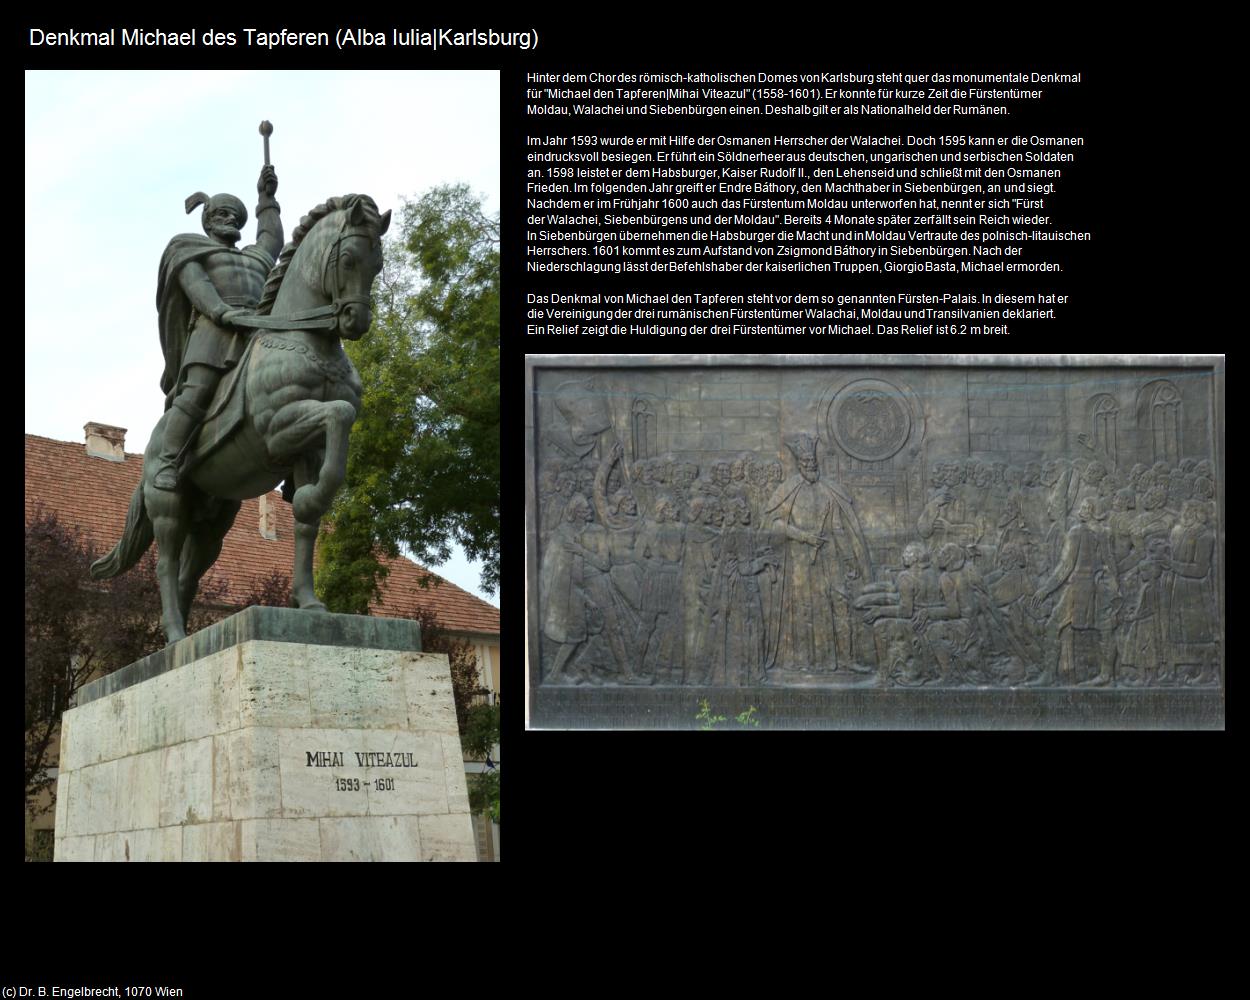 Denkmal Michael des Tapferen  (Alba Iulia|Karlsburg) in RUMÄNIEN